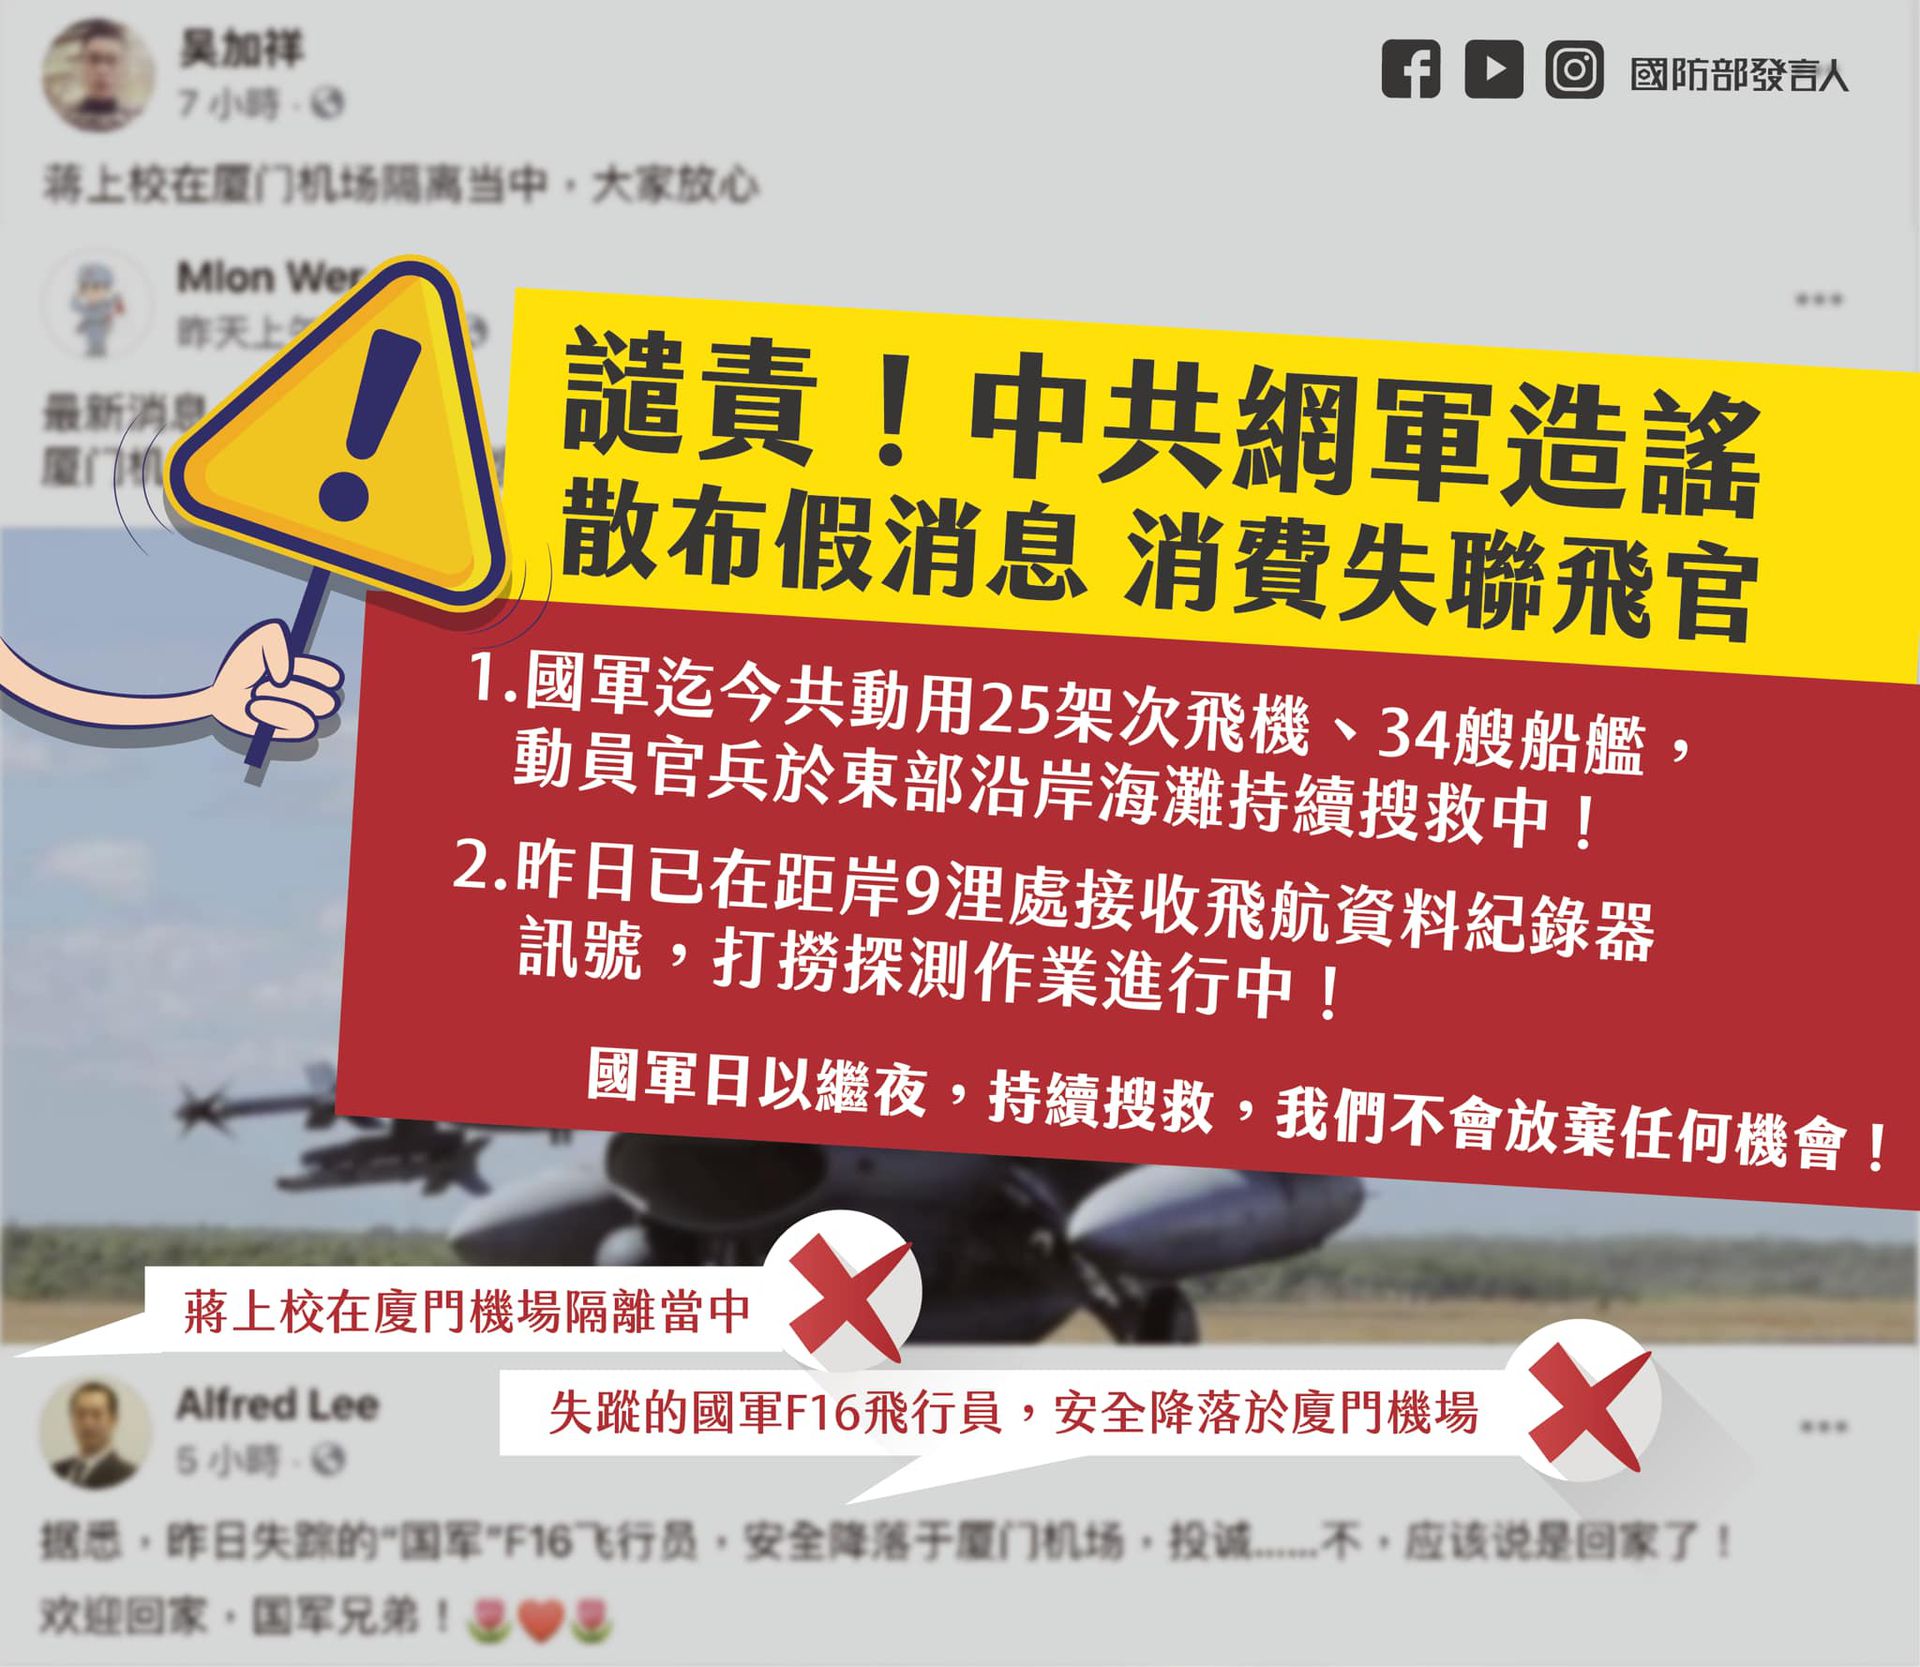 F 16a战机是否叛逃台防部生气驳斥 多维新闻 台湾